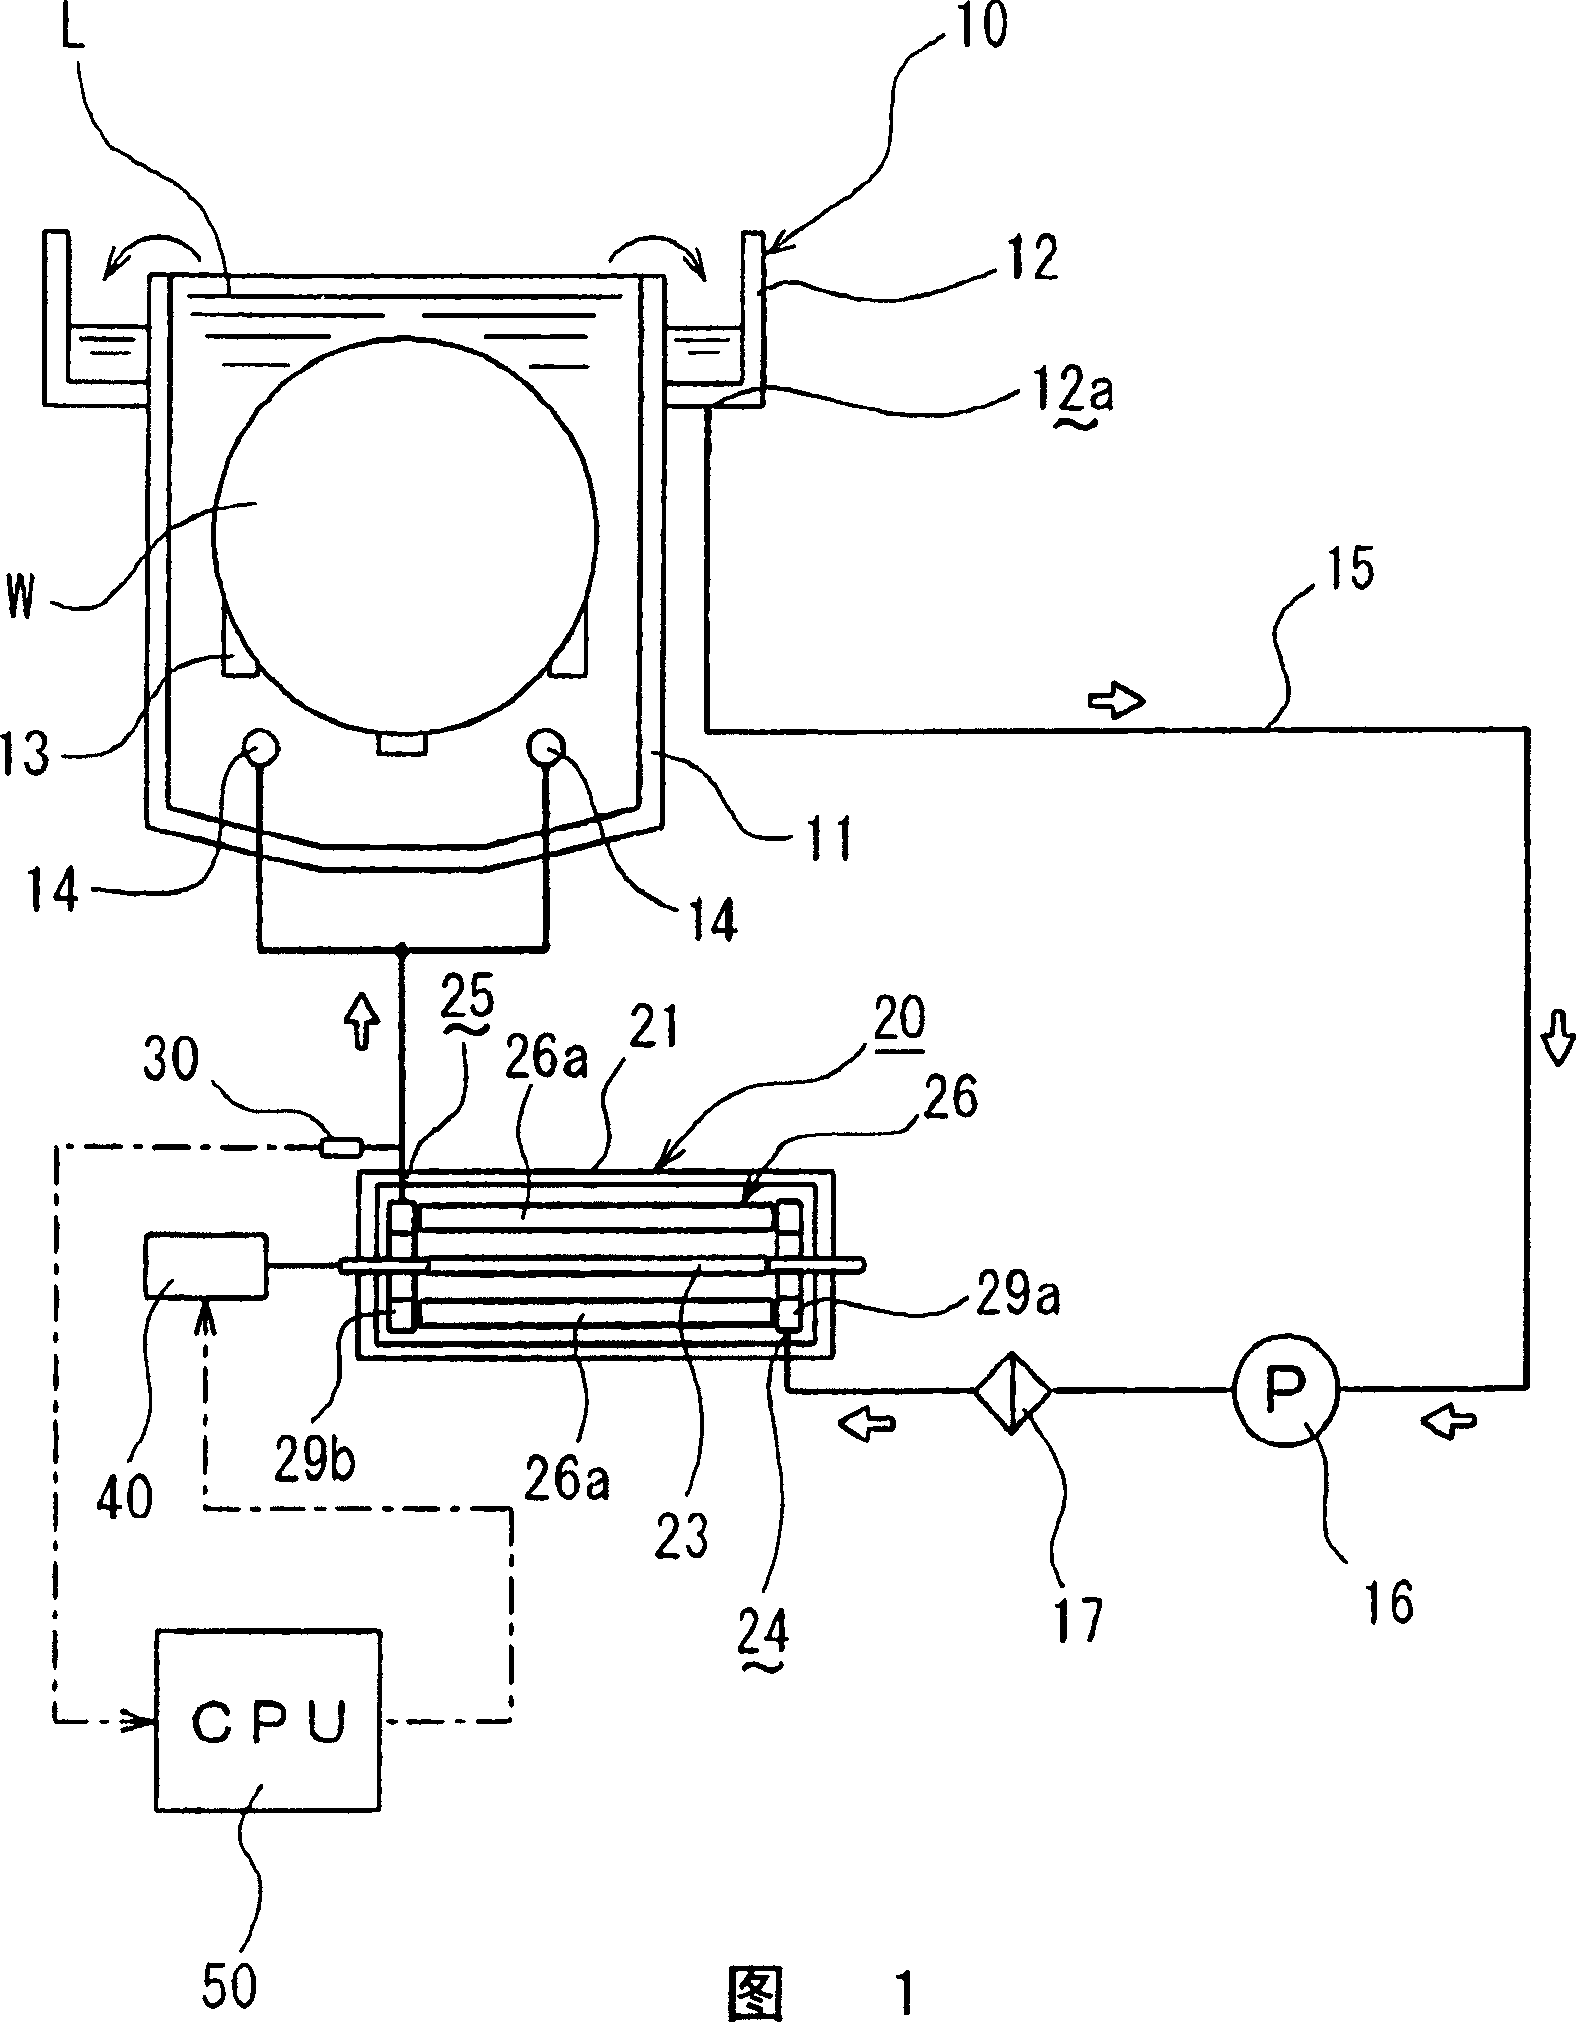 Fluid heating apparatus